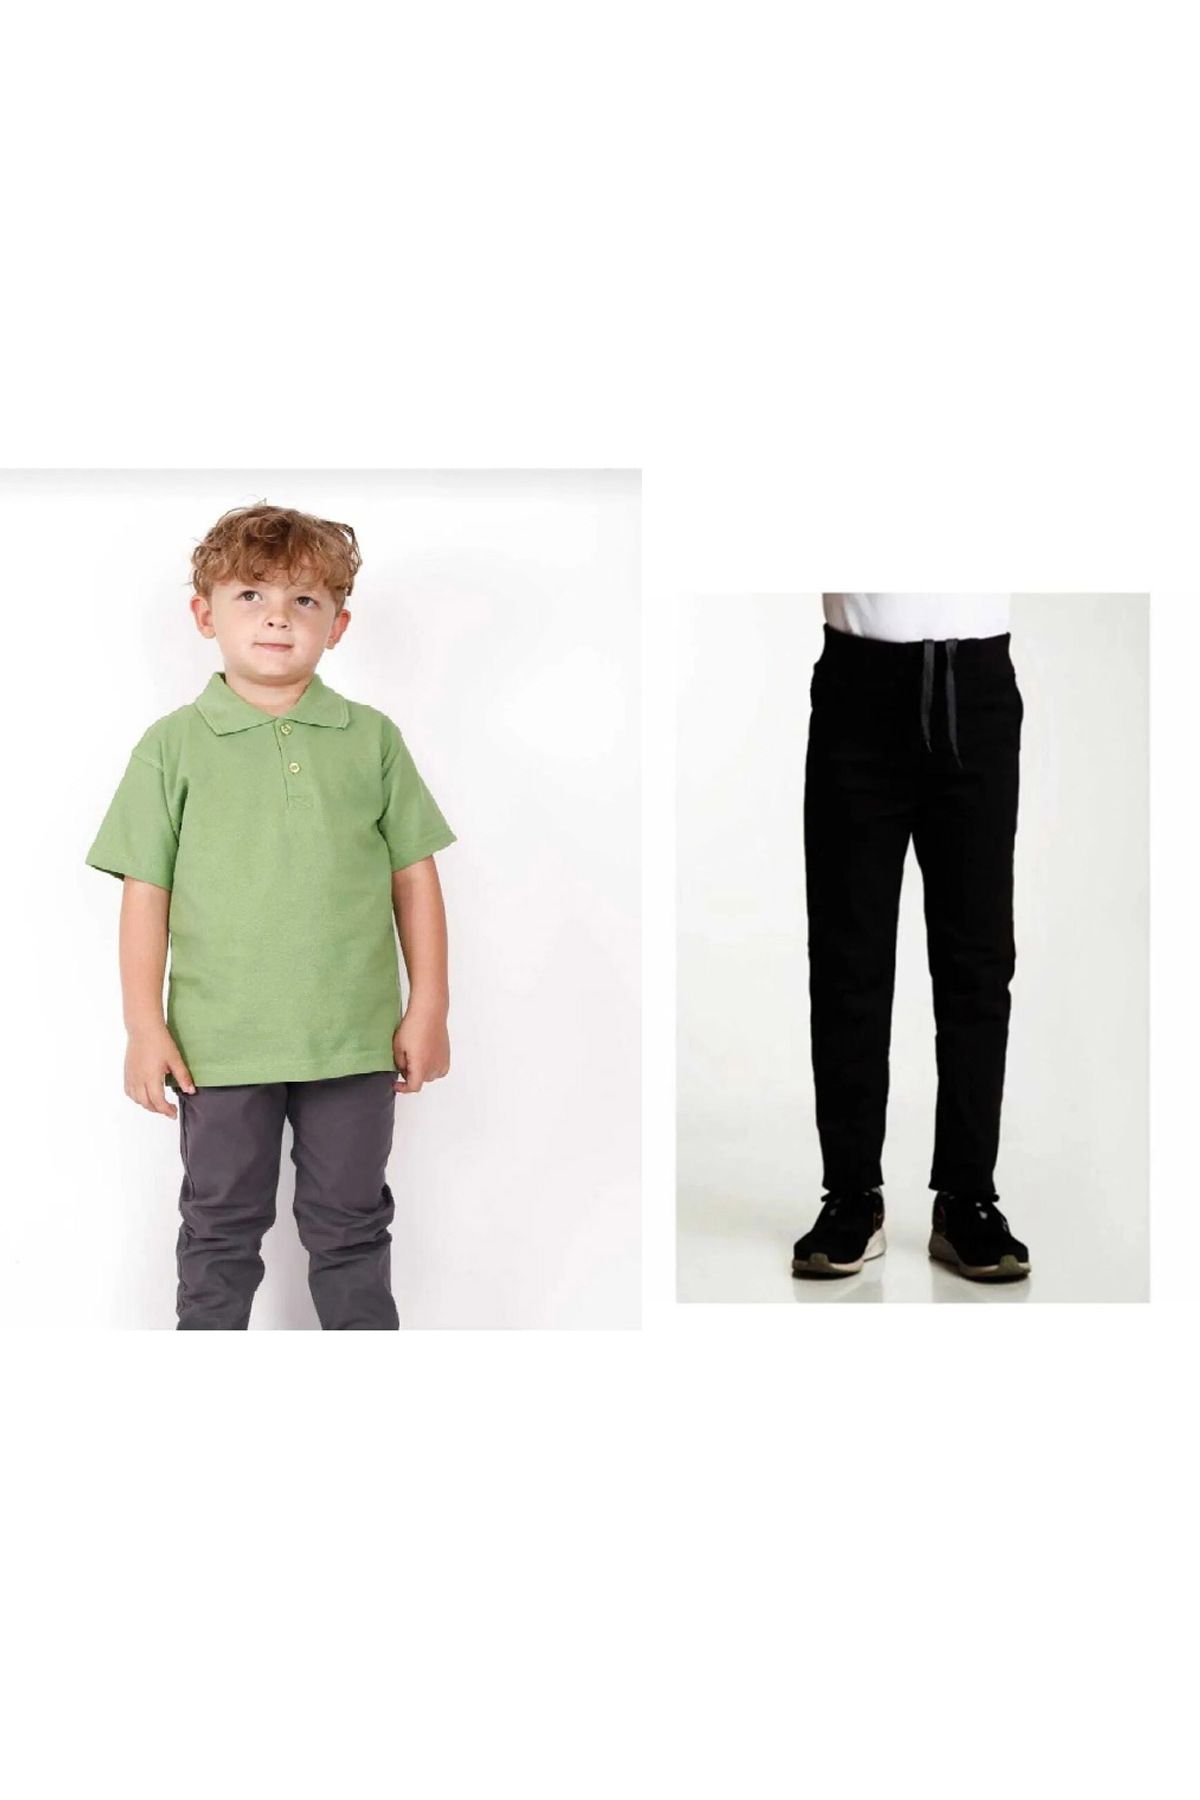 FATELLA Unisex çocuk okul ribana bel pantolon - yeşil kısa kol Polo yaka T-shirt İkili takım